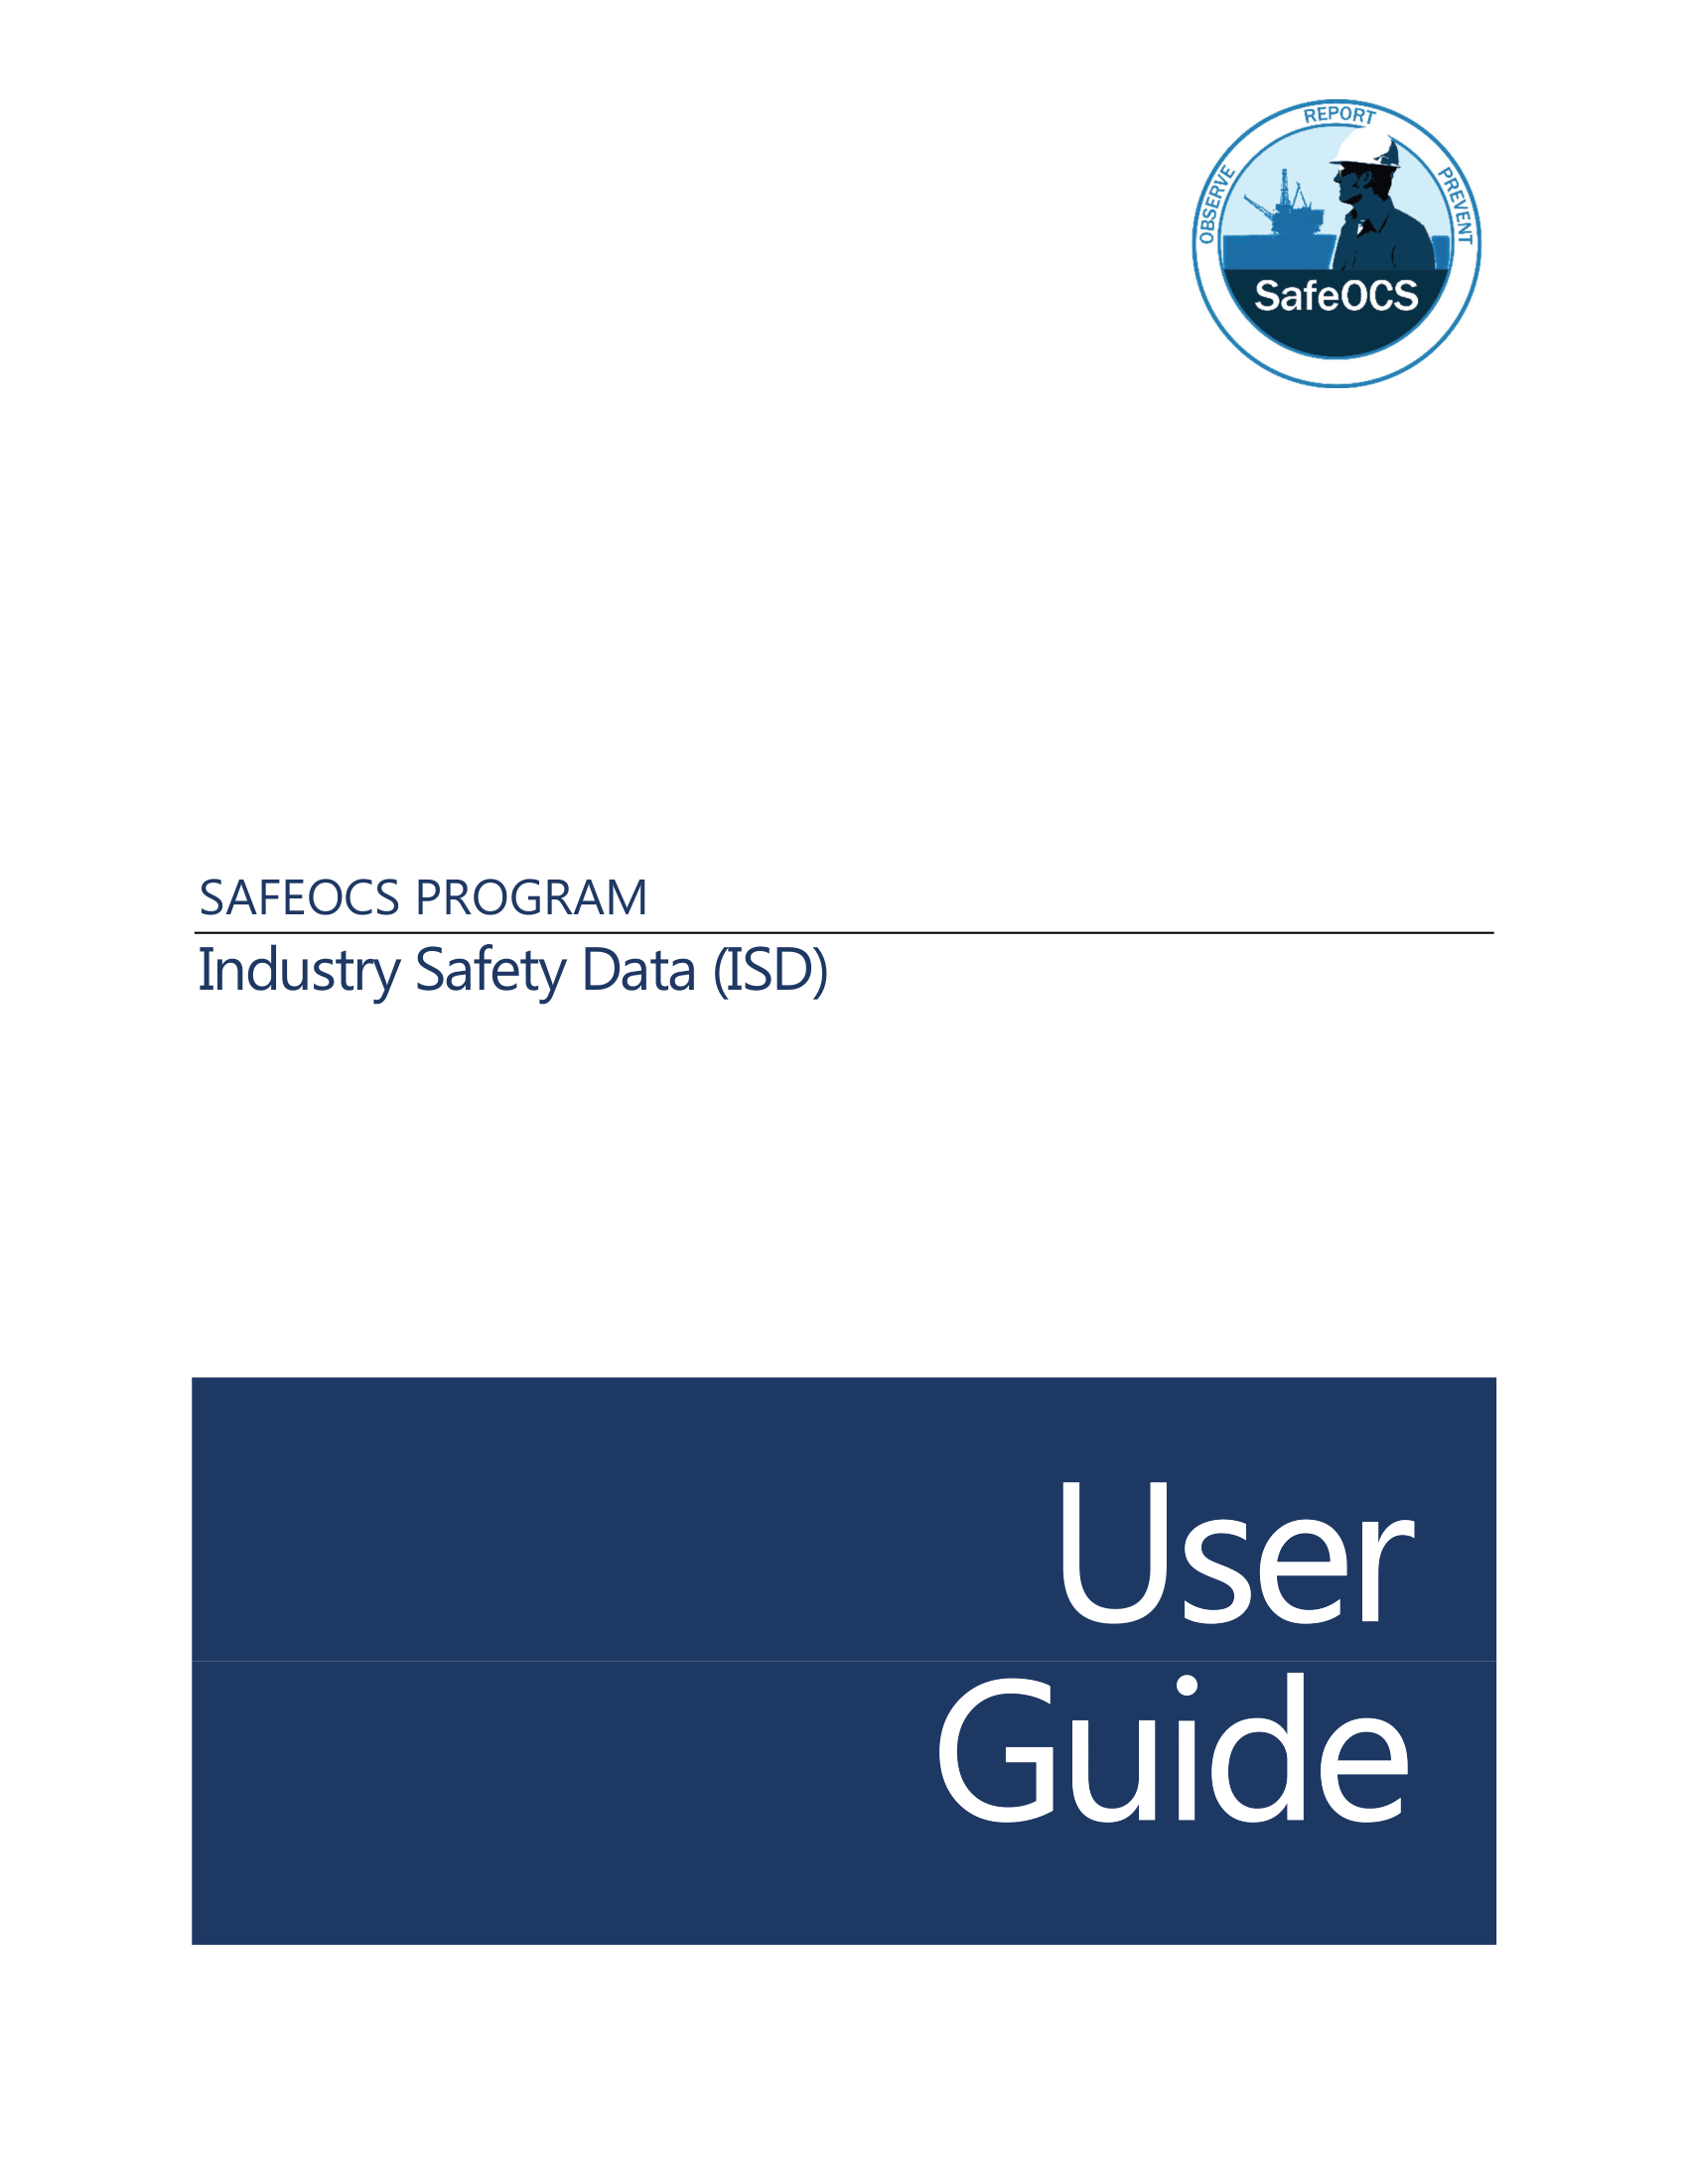 ISD User Guide cover